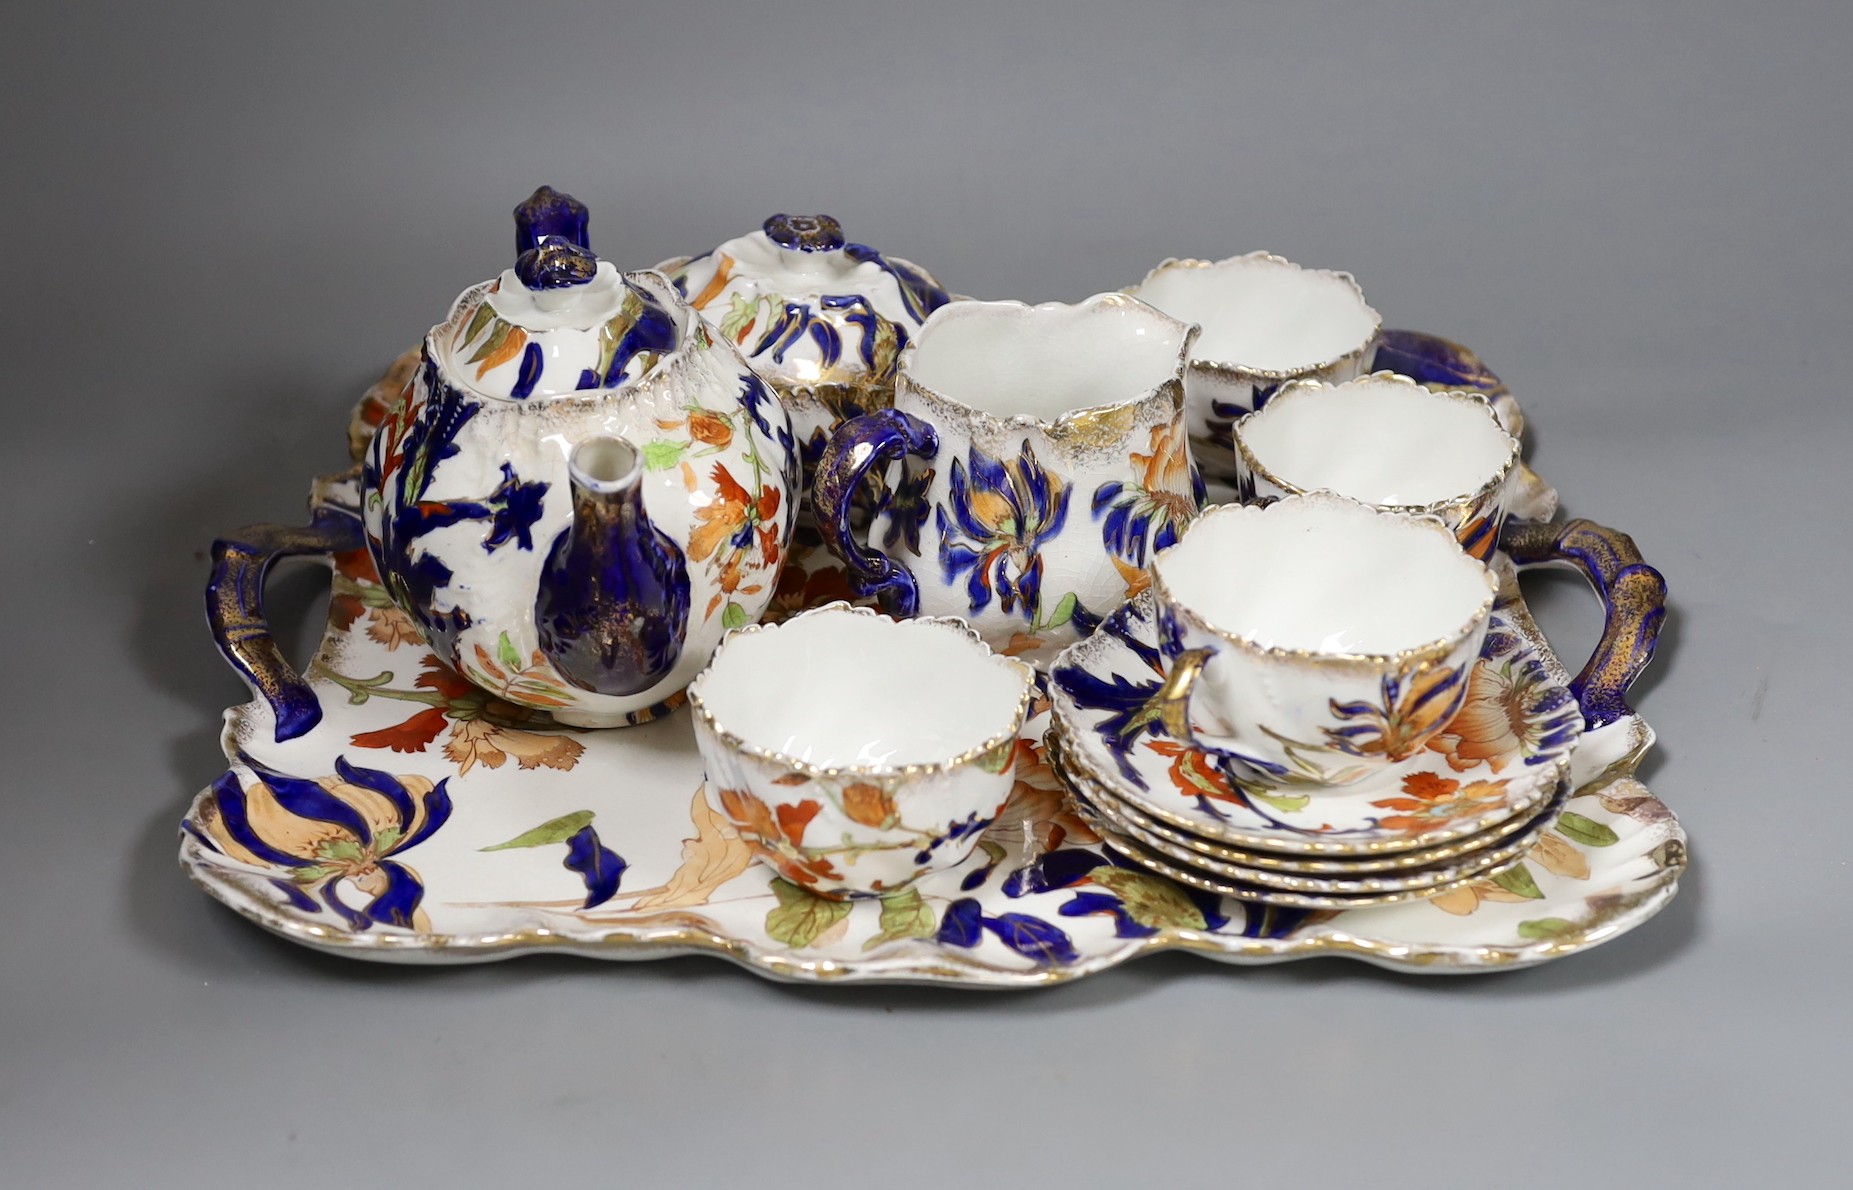 A Ridgways Fantasia porcelain tea set